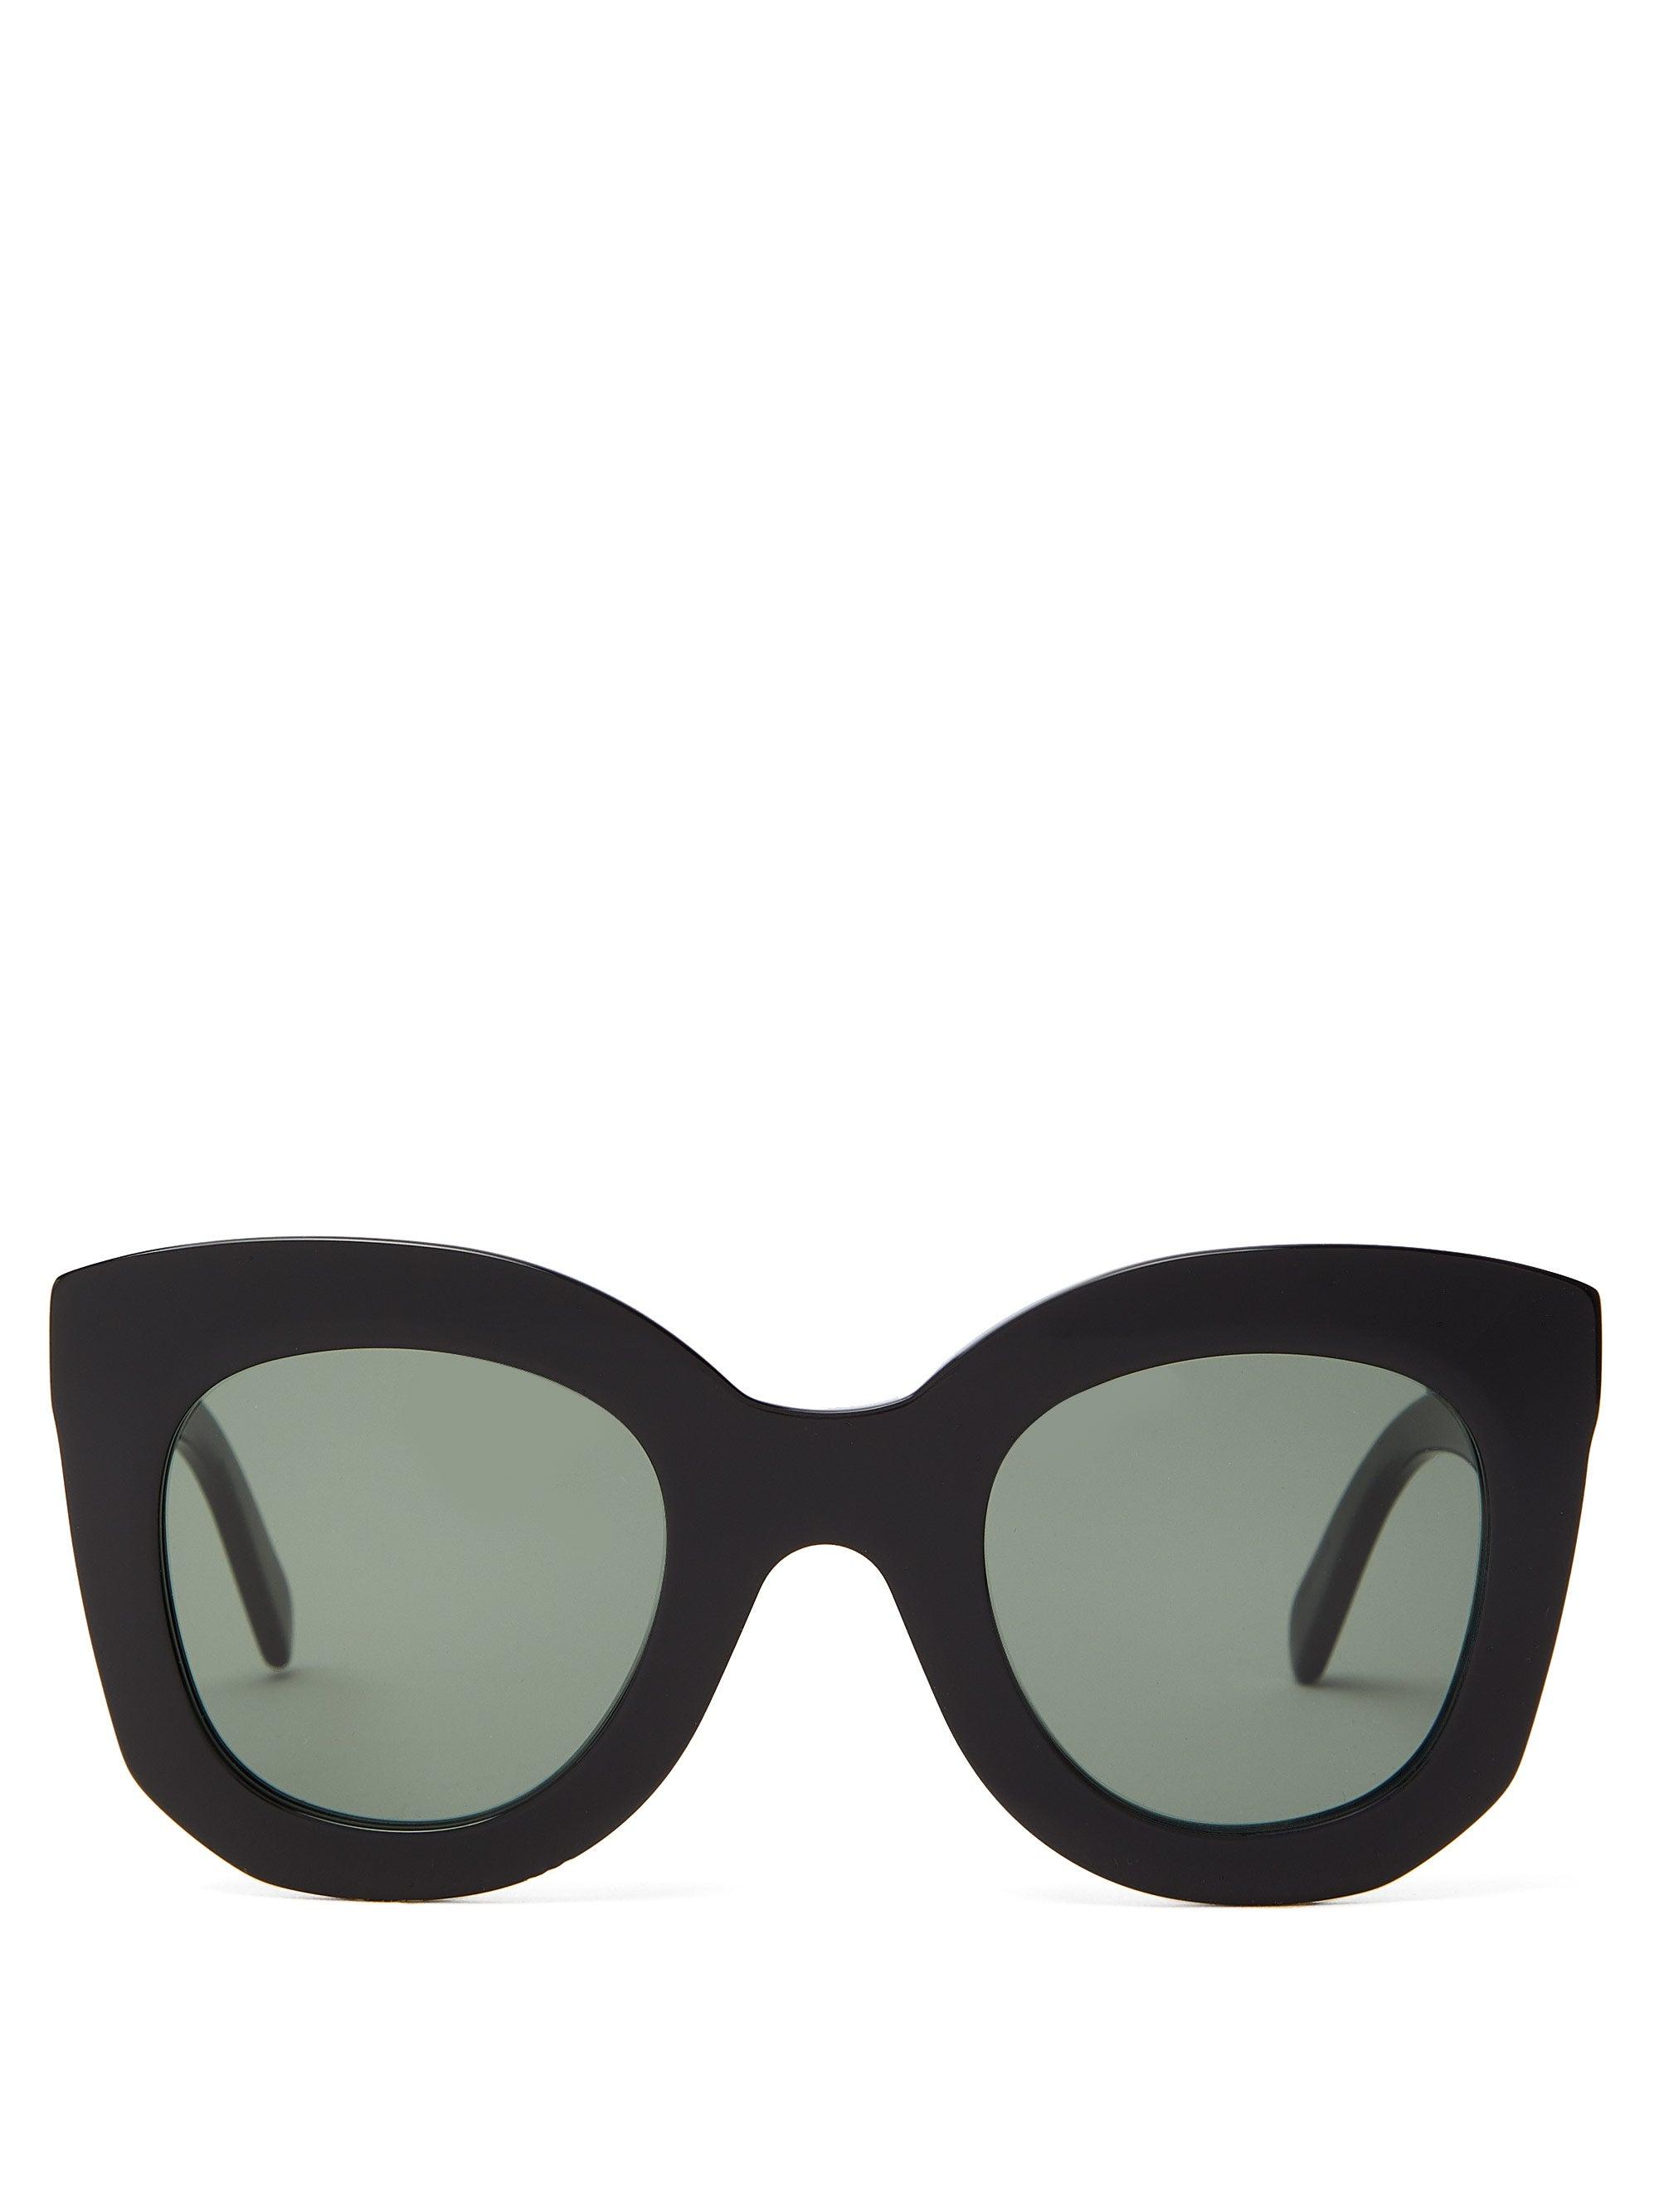 Celine Oversized Round Acetate Sunglasses in Black - Lyst